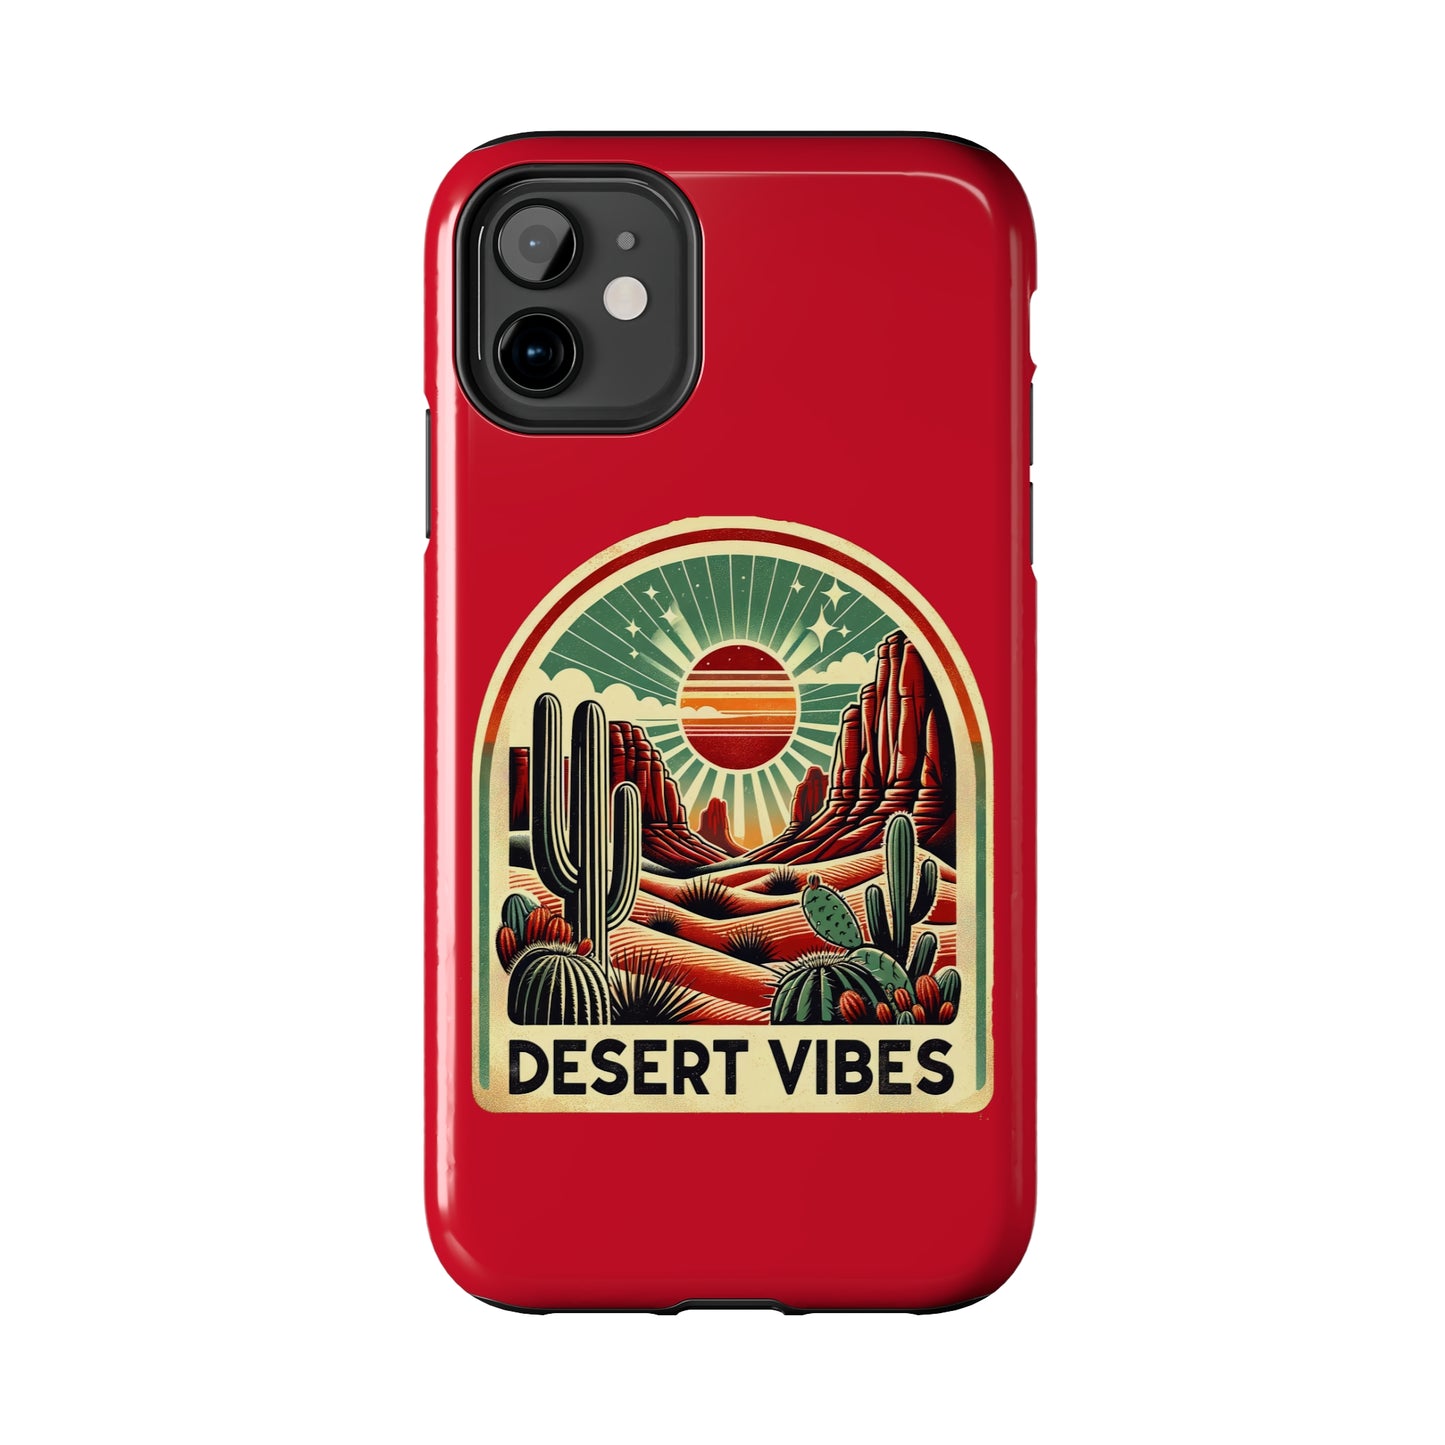 Desert Vibes tough phone case